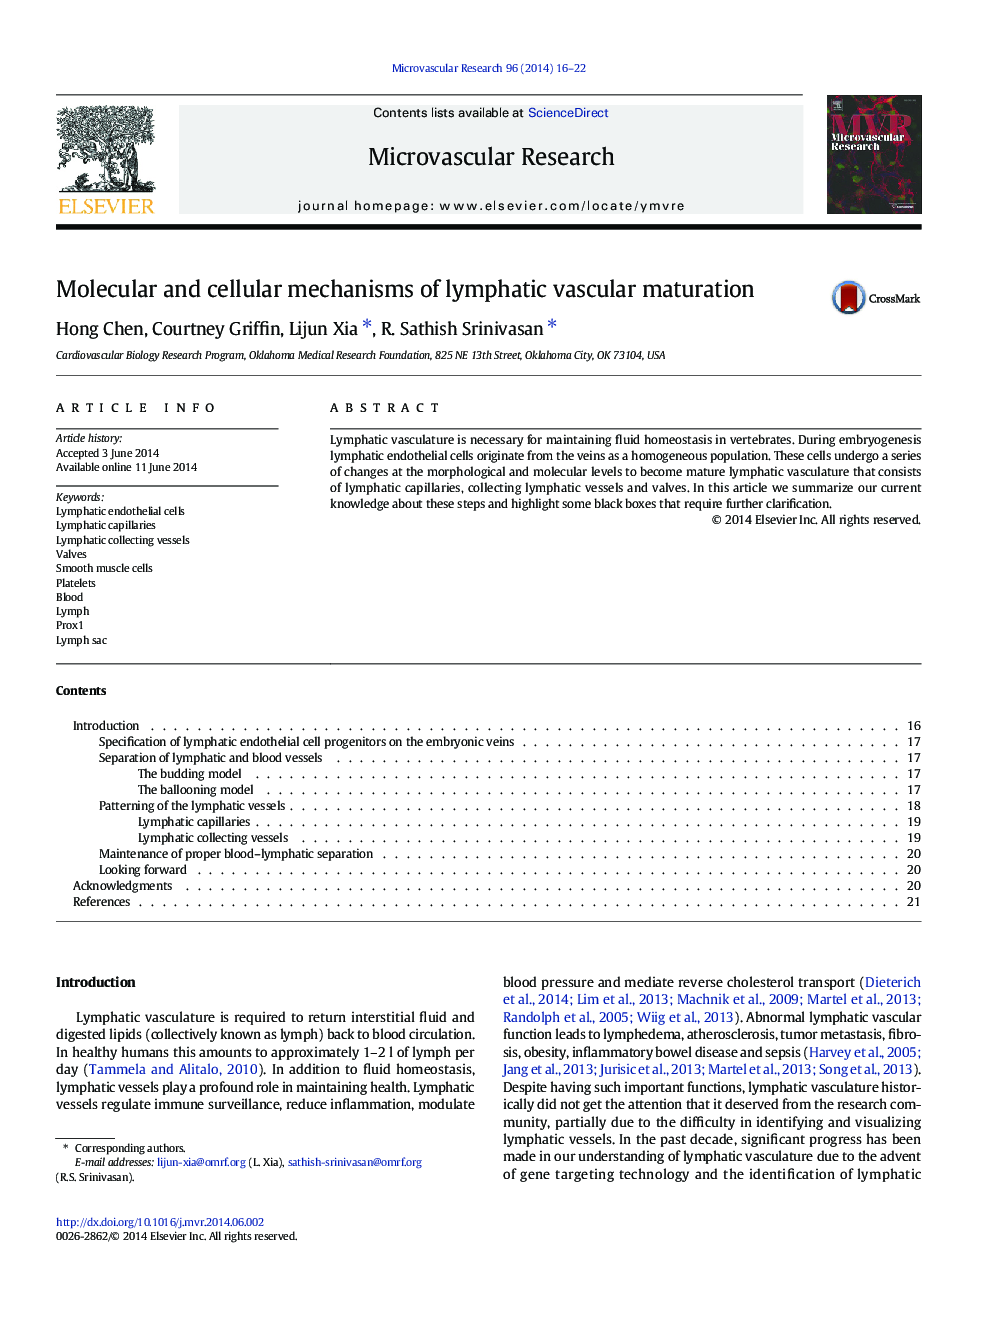 Molecular and cellular mechanisms of lymphatic vascular maturation